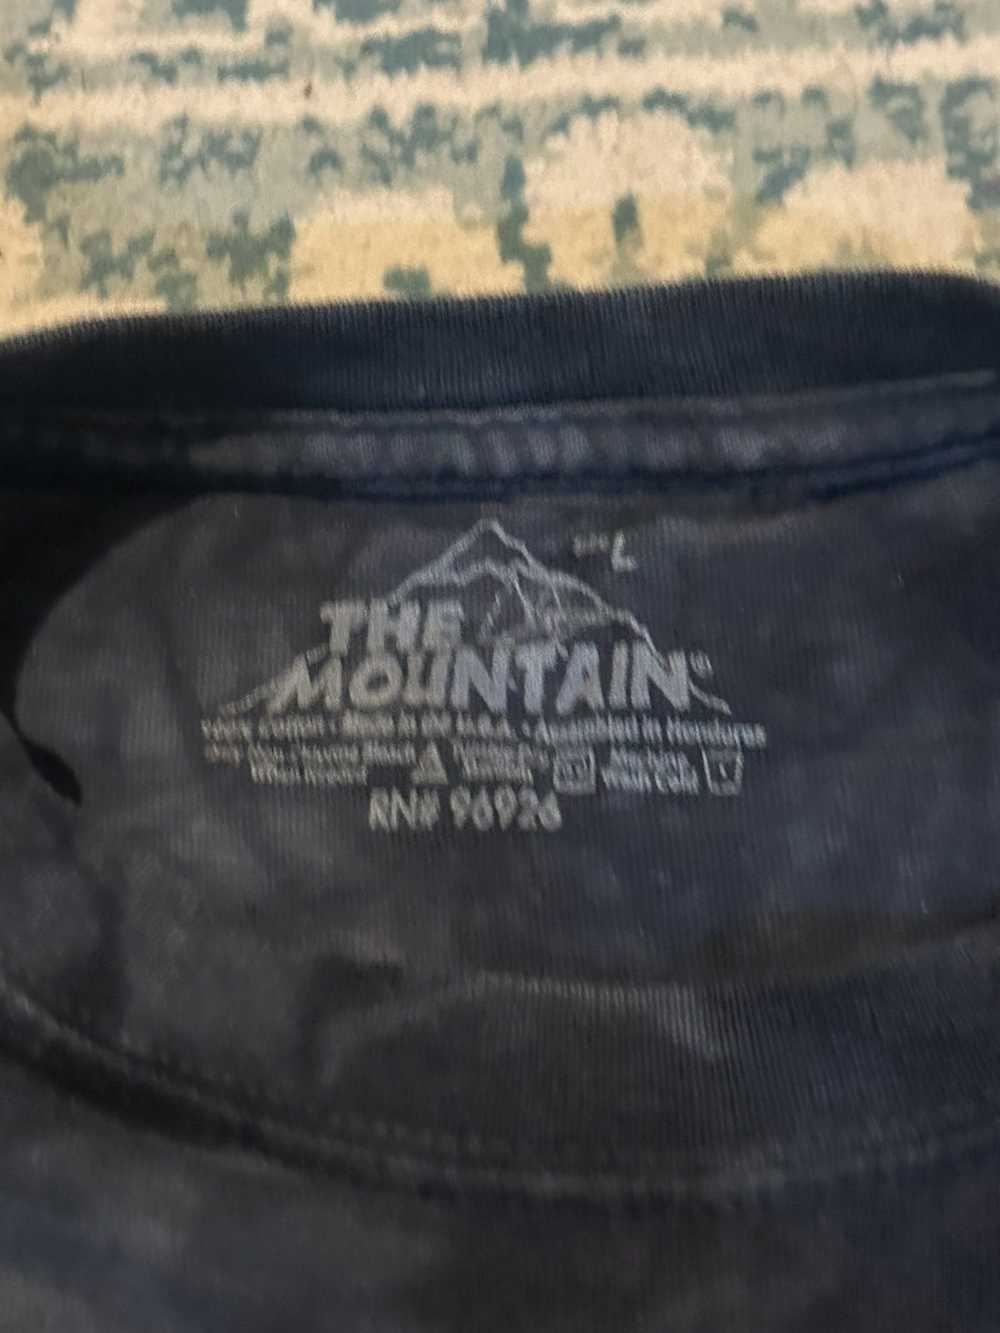 The Mountain The mountain Tiger shirt - image 2